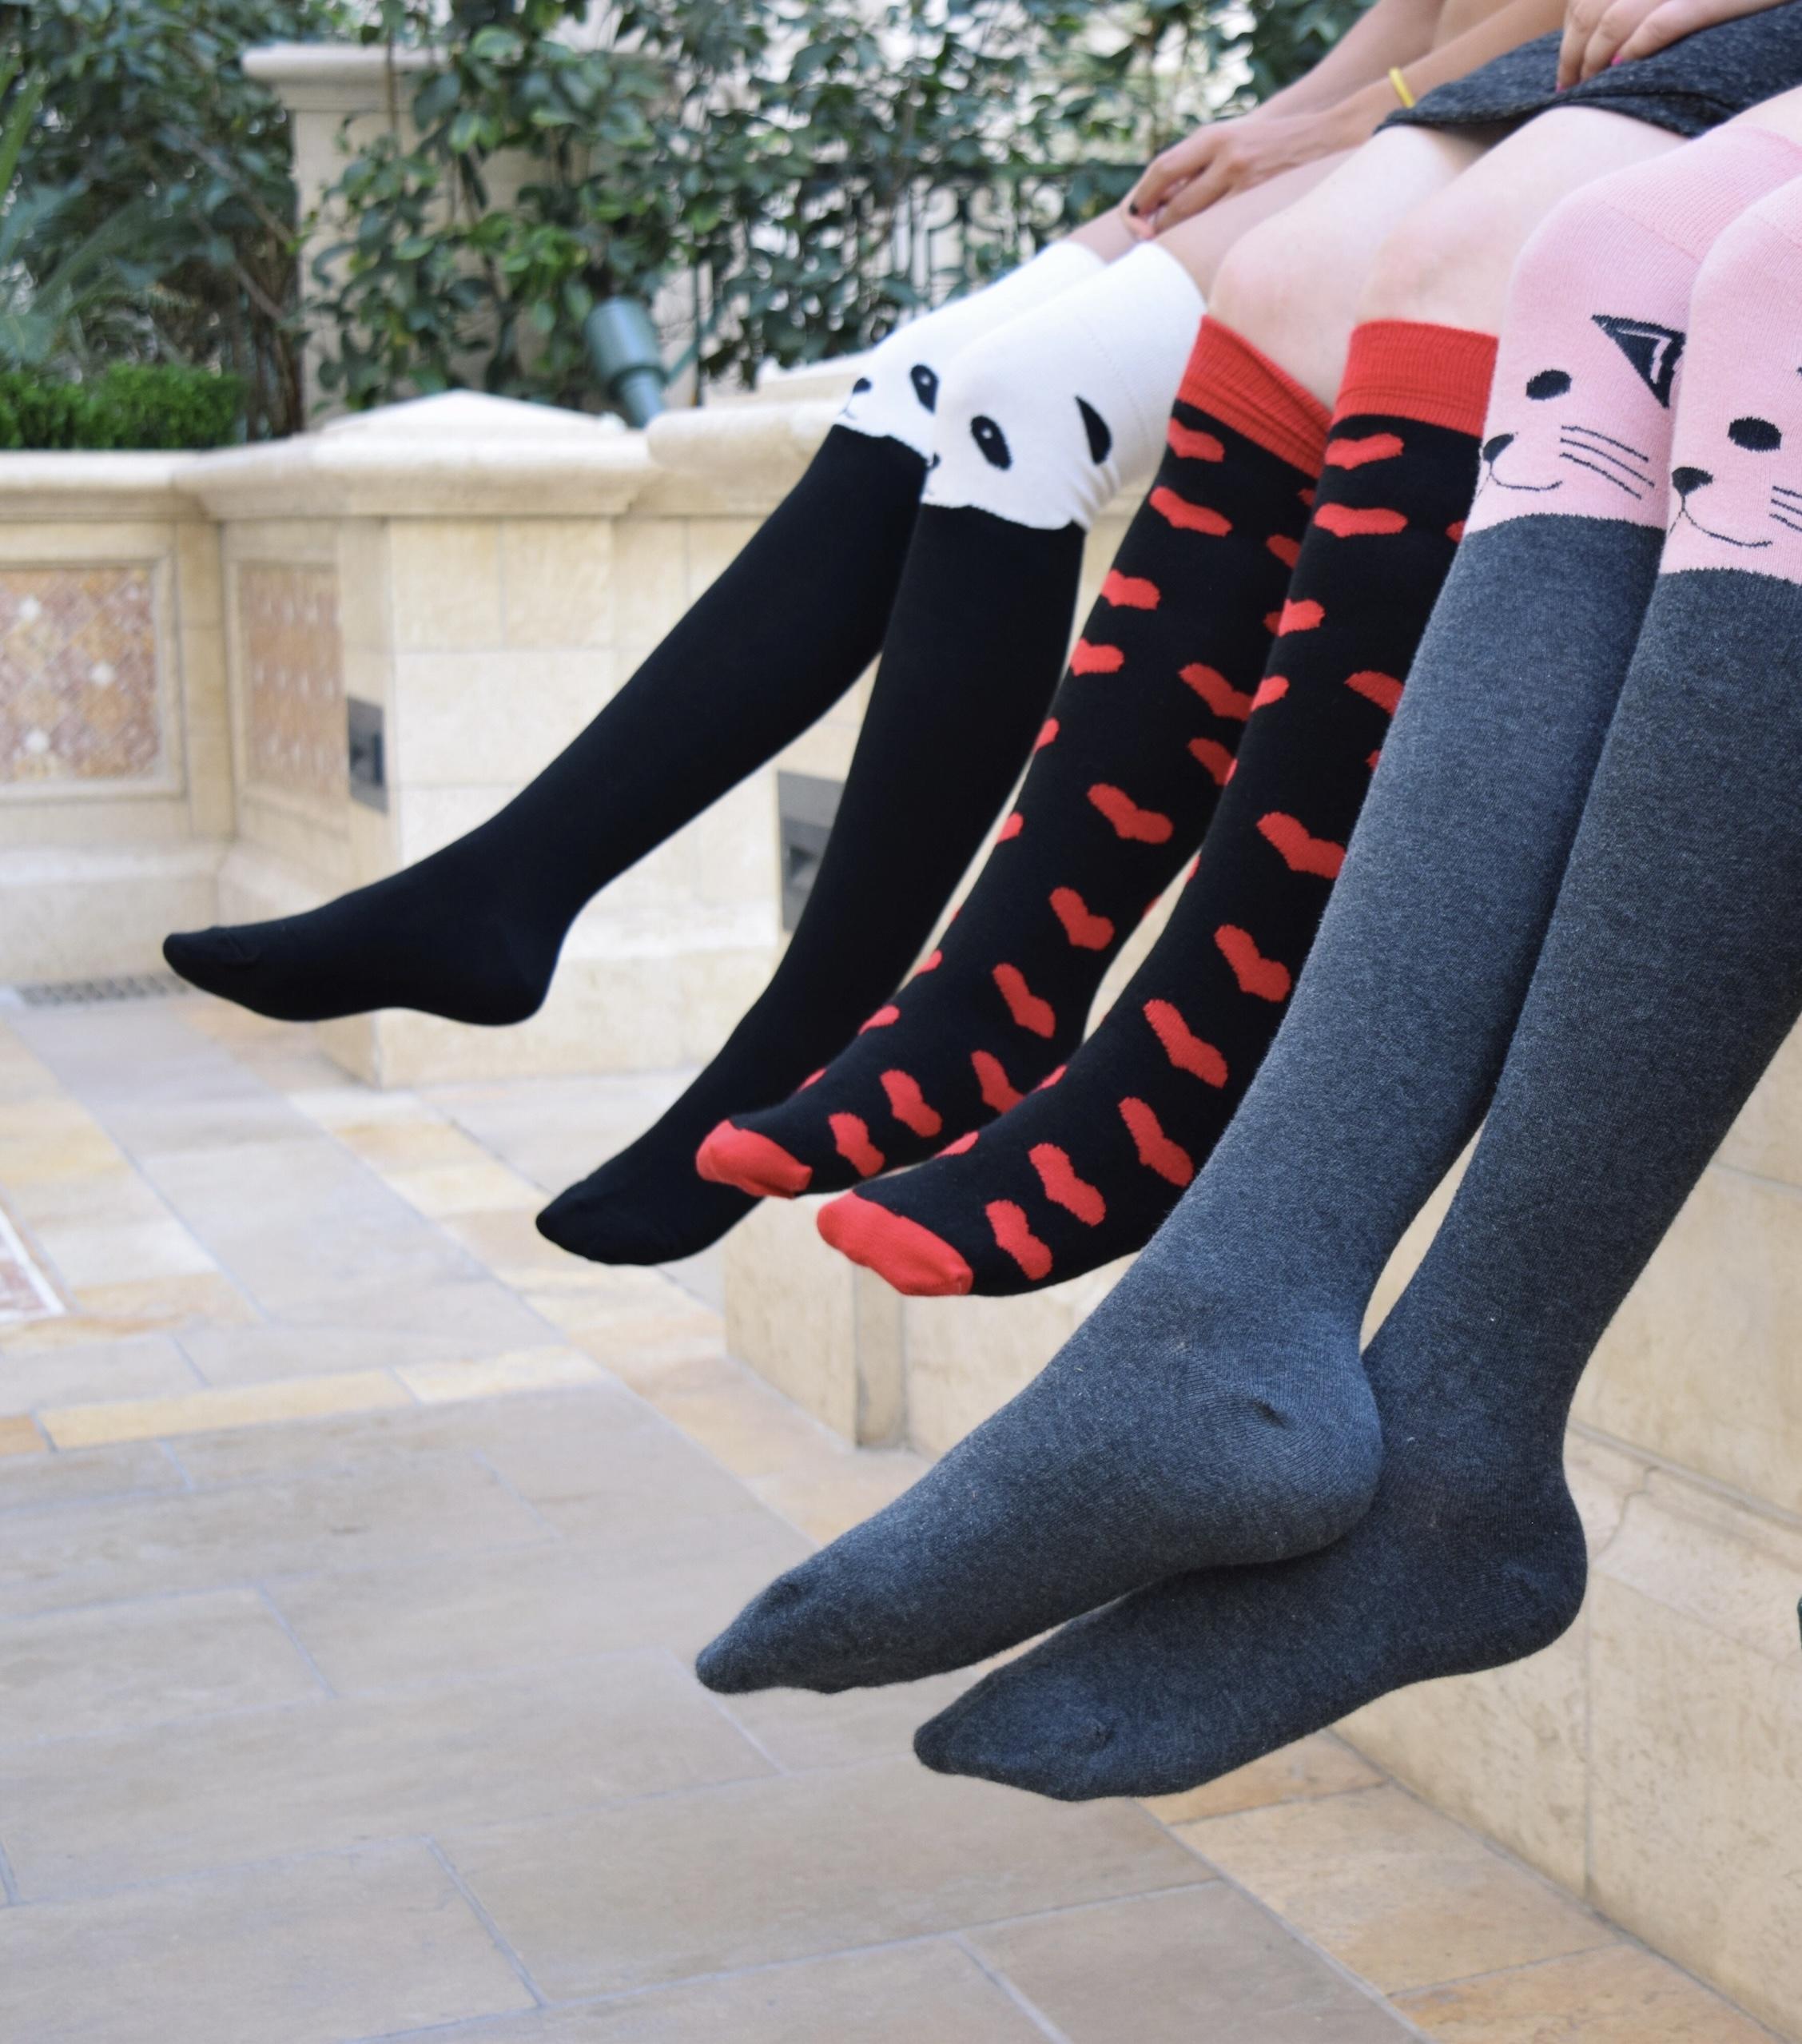 Wasdale Turn over Top Socks – The Wasdale Sock Company